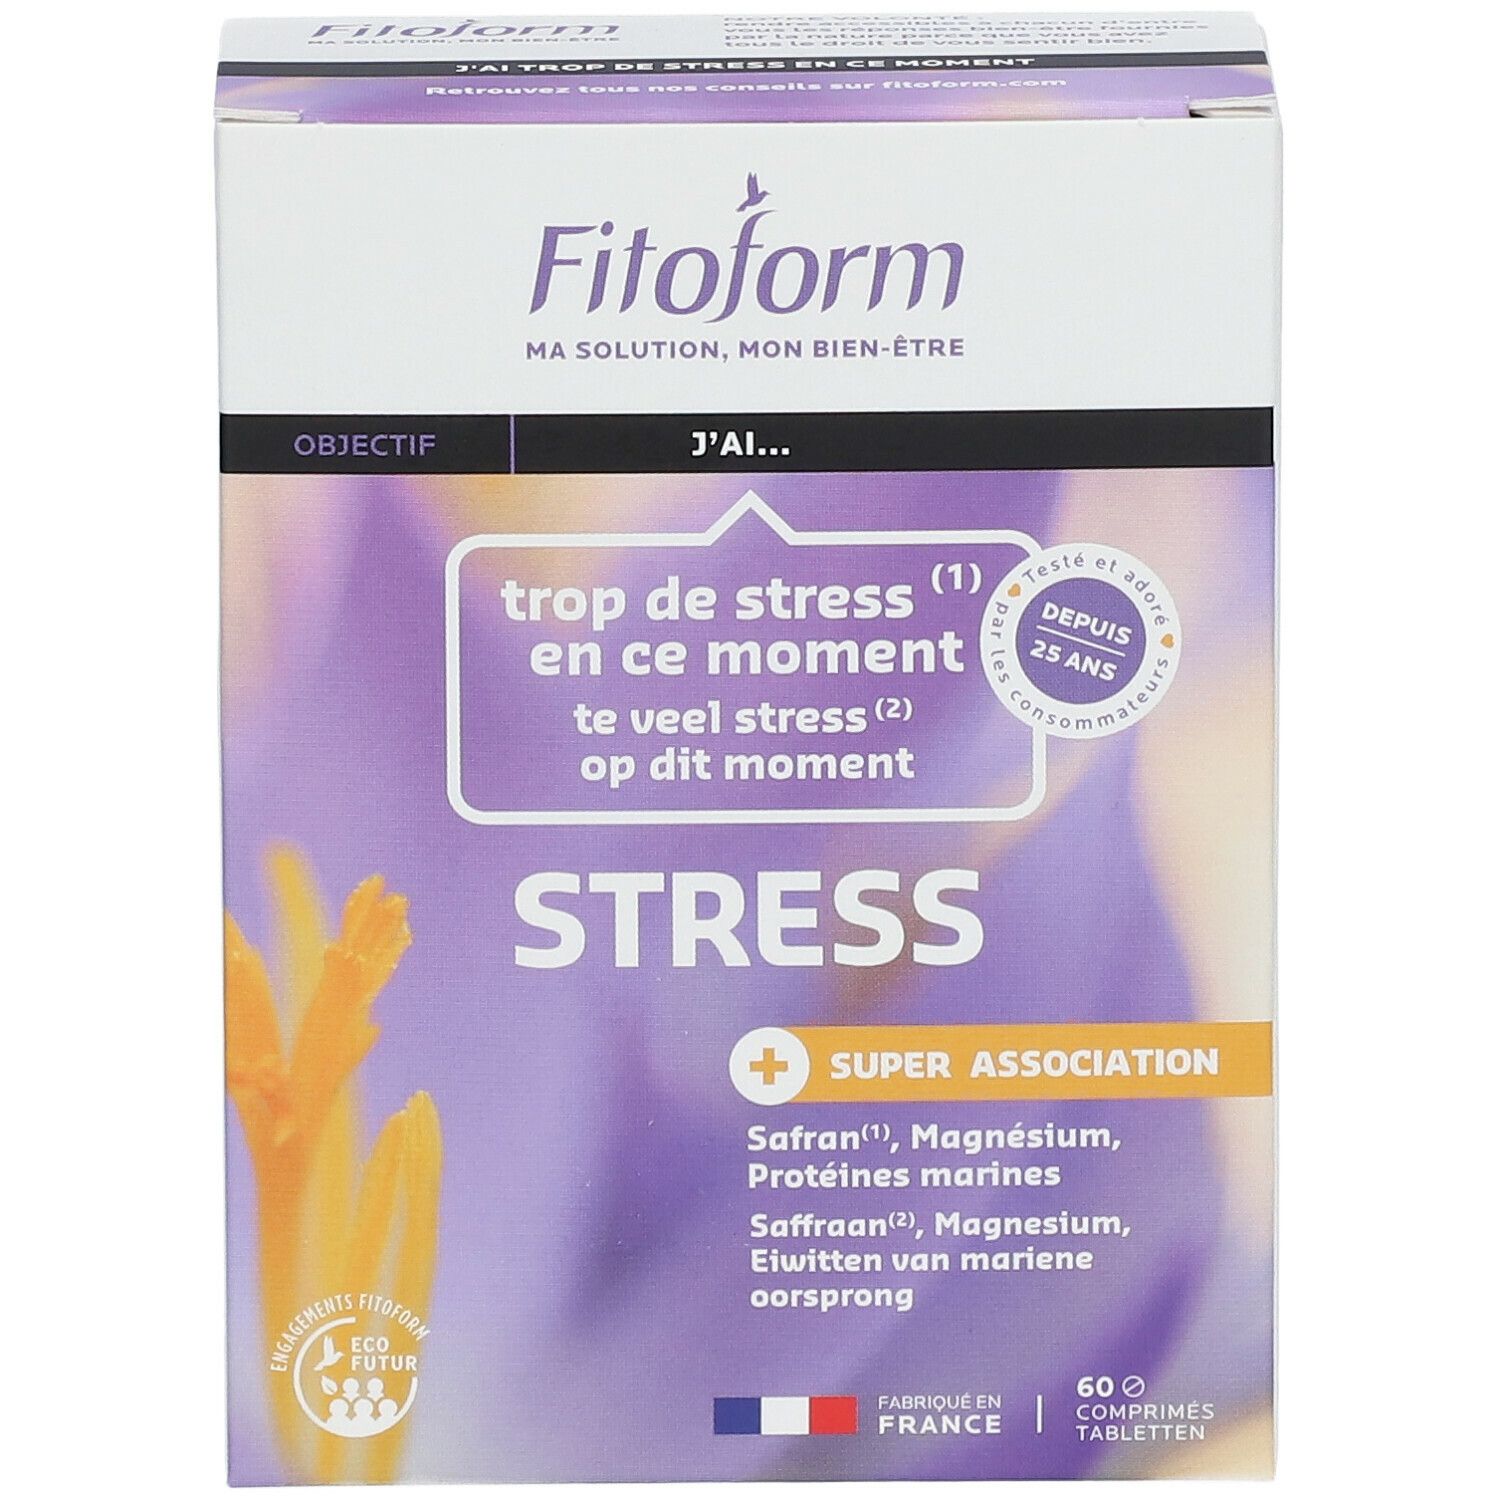 Fitoform Stress